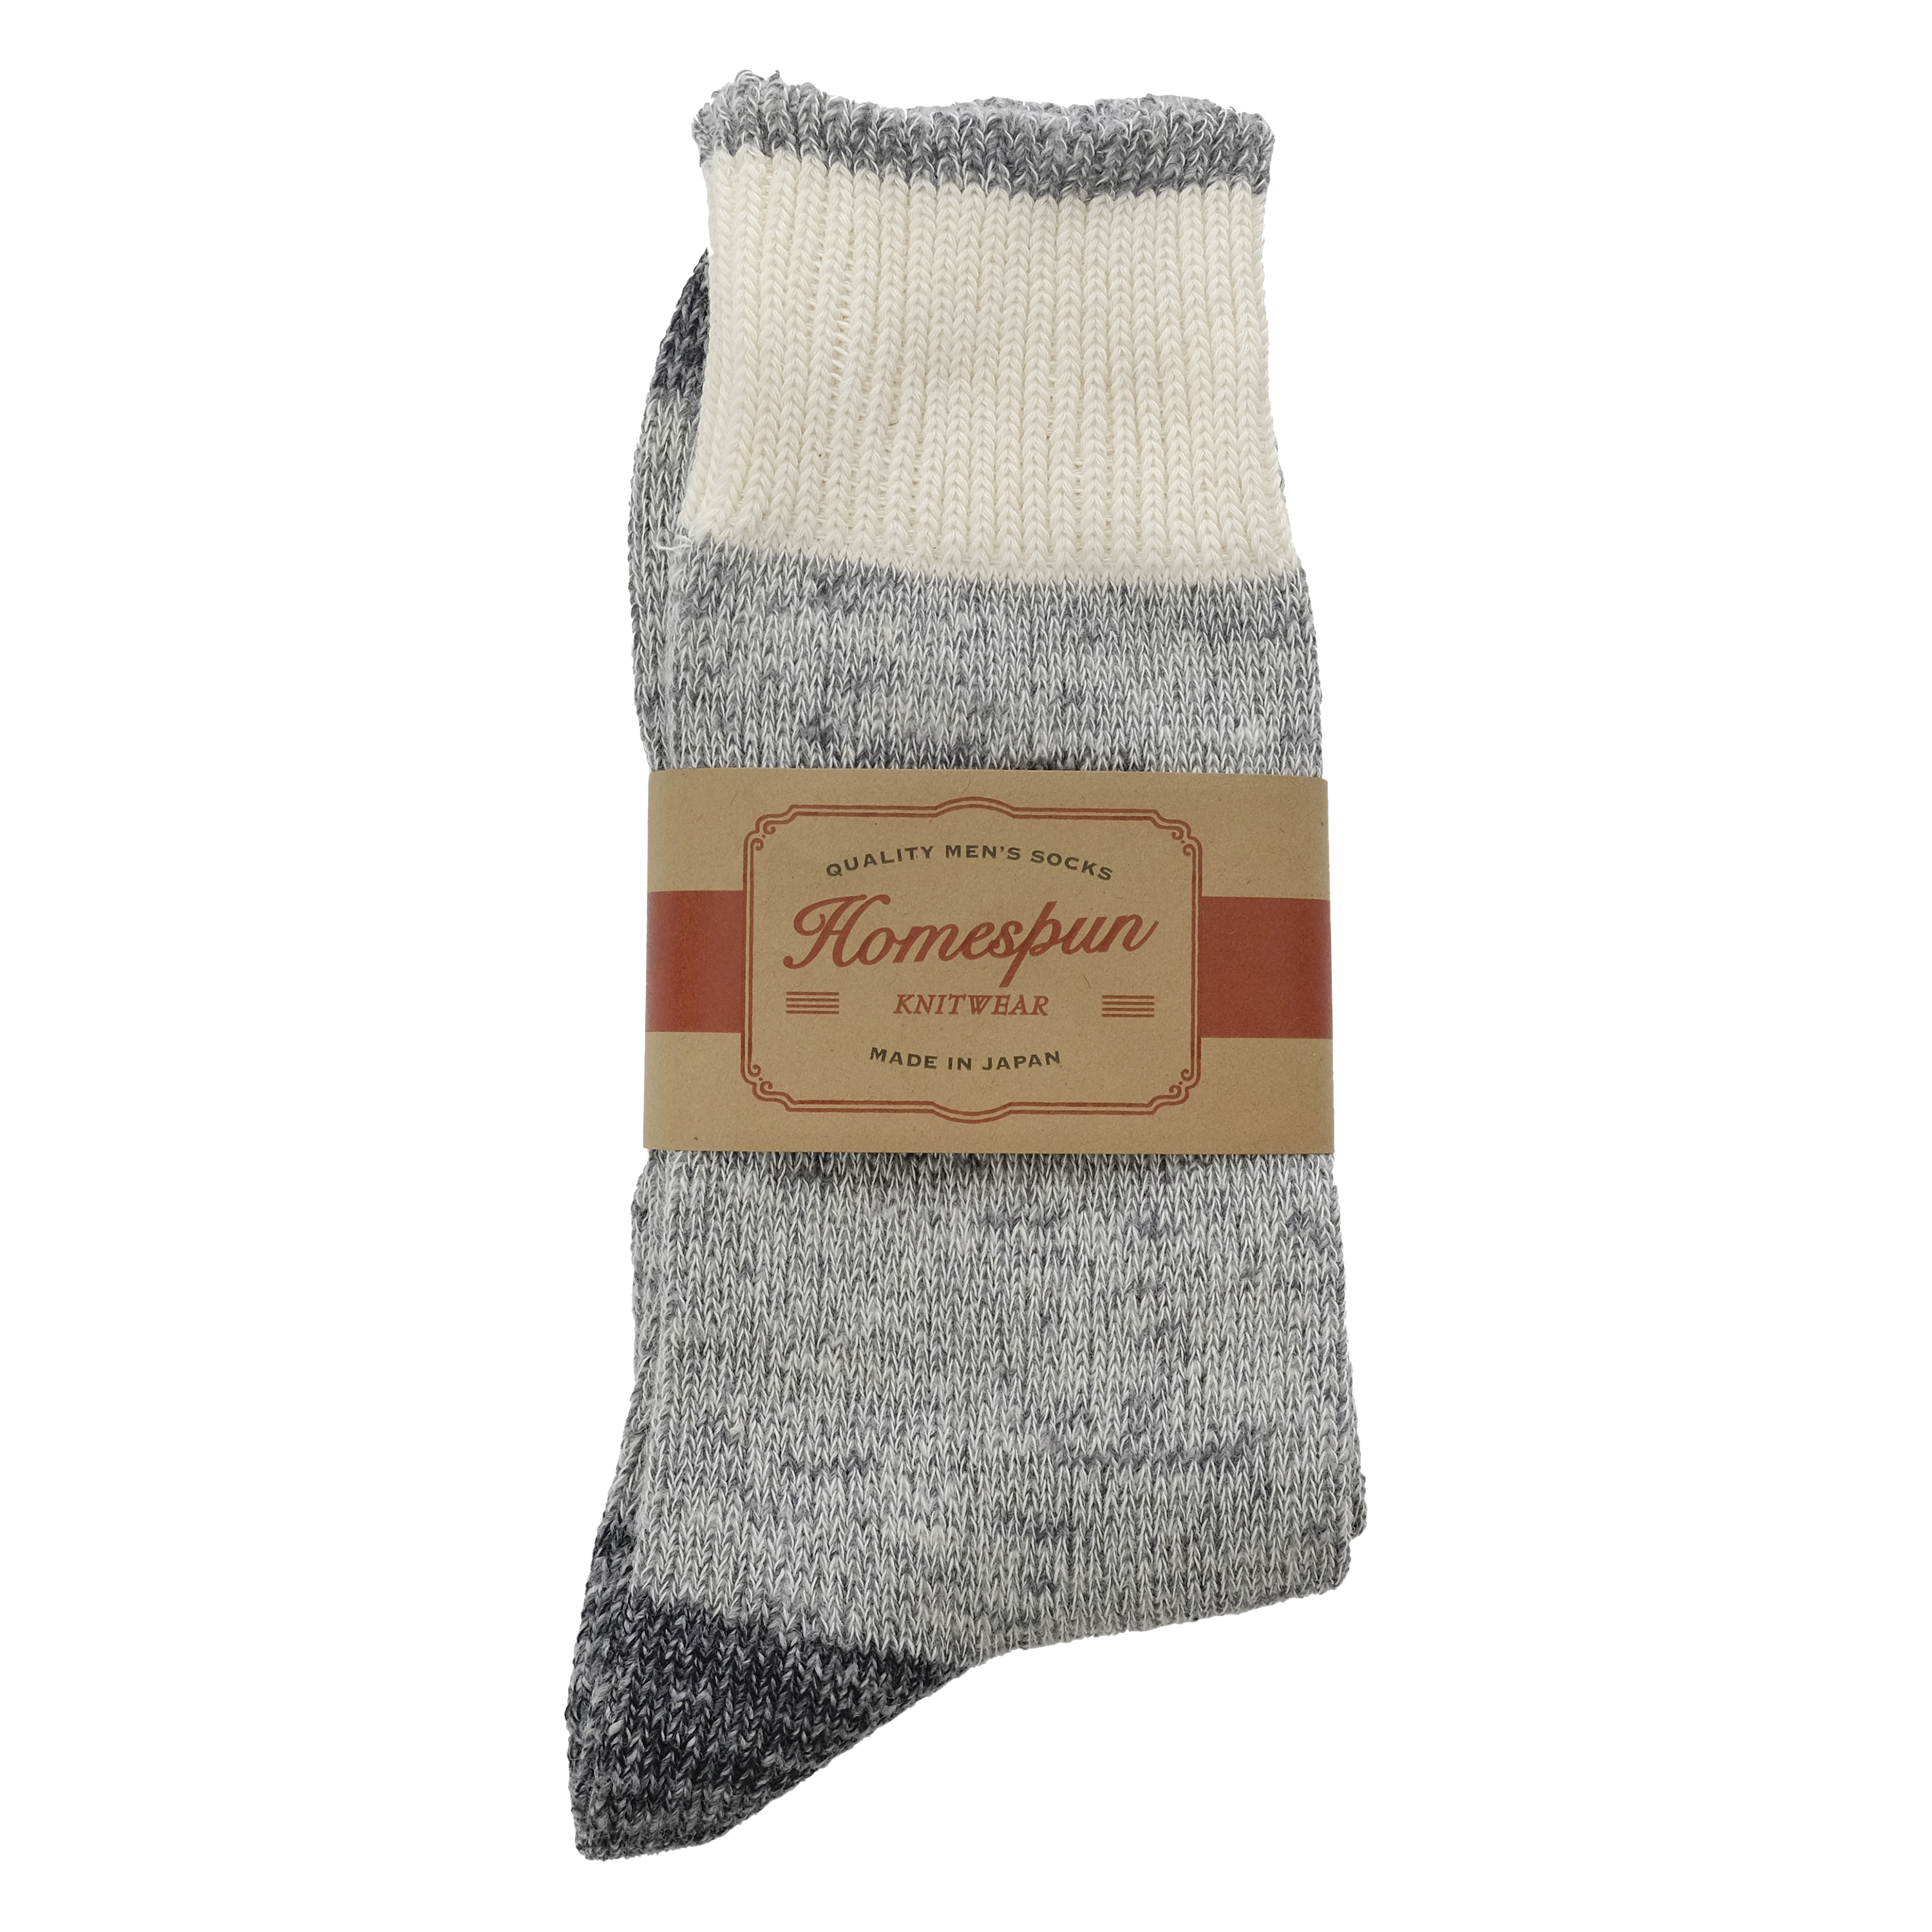 Homespun Knitwear - Lot 011 Dustbowl Work Socks - Grey